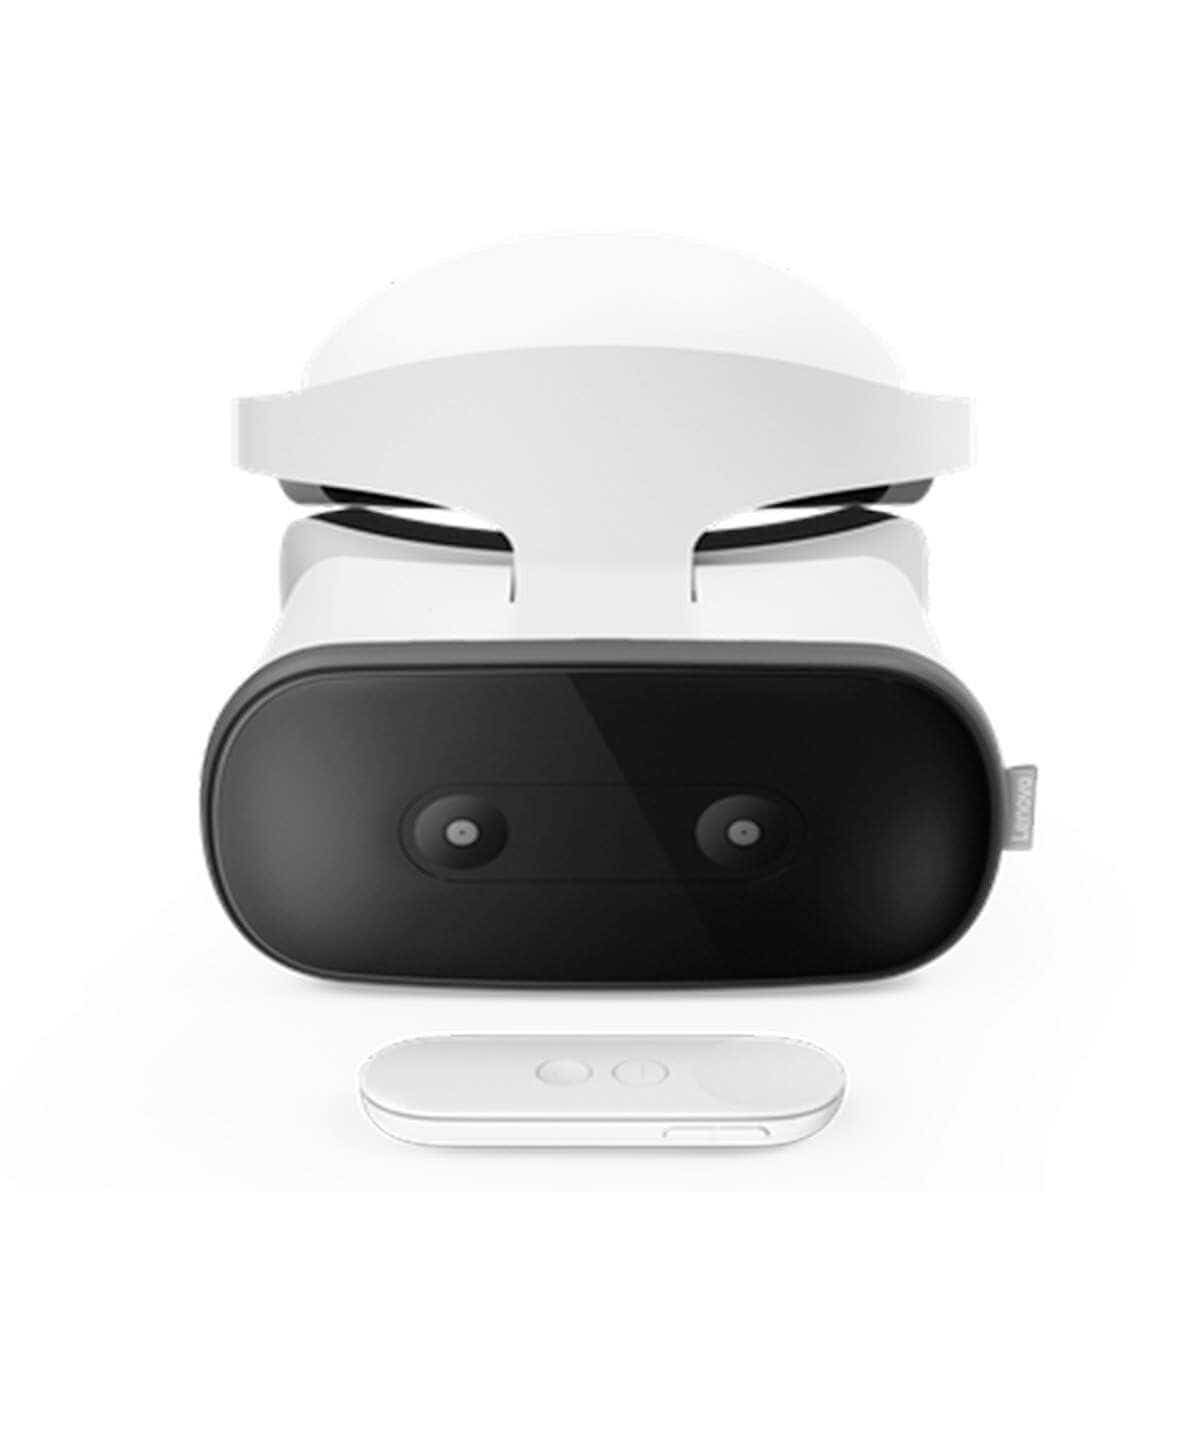 Lenovo Unveils Mirage Solo Daydream Standalone VR Headset - Vietnam